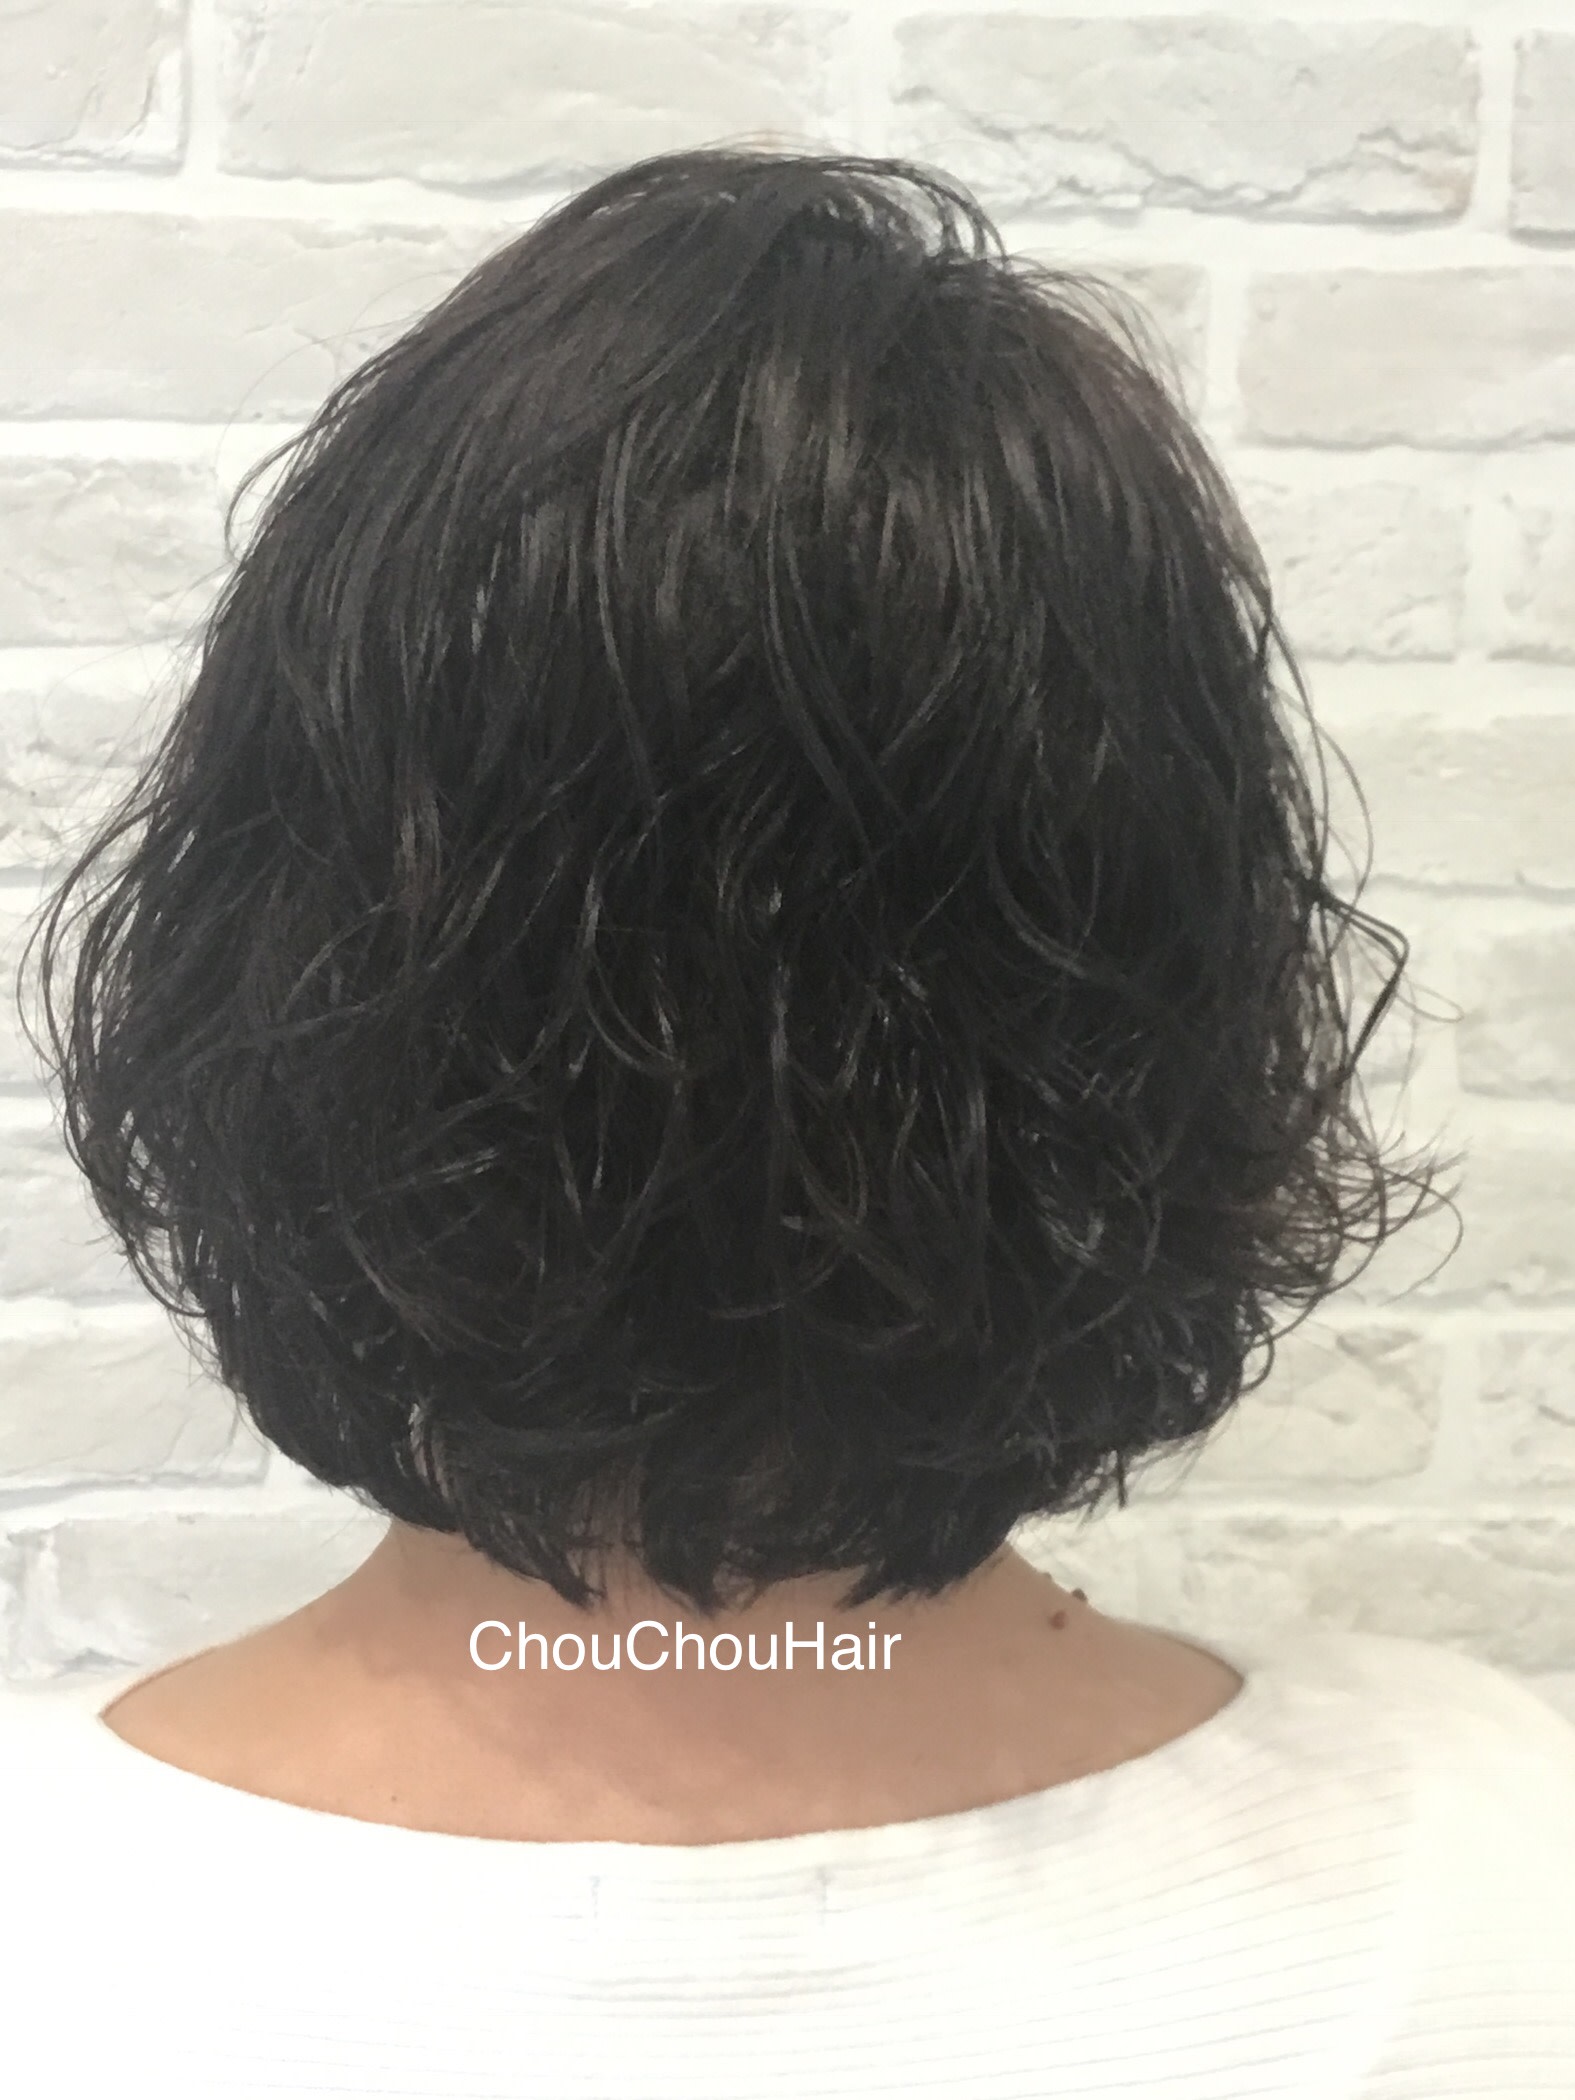 Chou Chou Hair【シュシュヘアー】のスタイル紹介。存在感たっぷりの上級ボブ